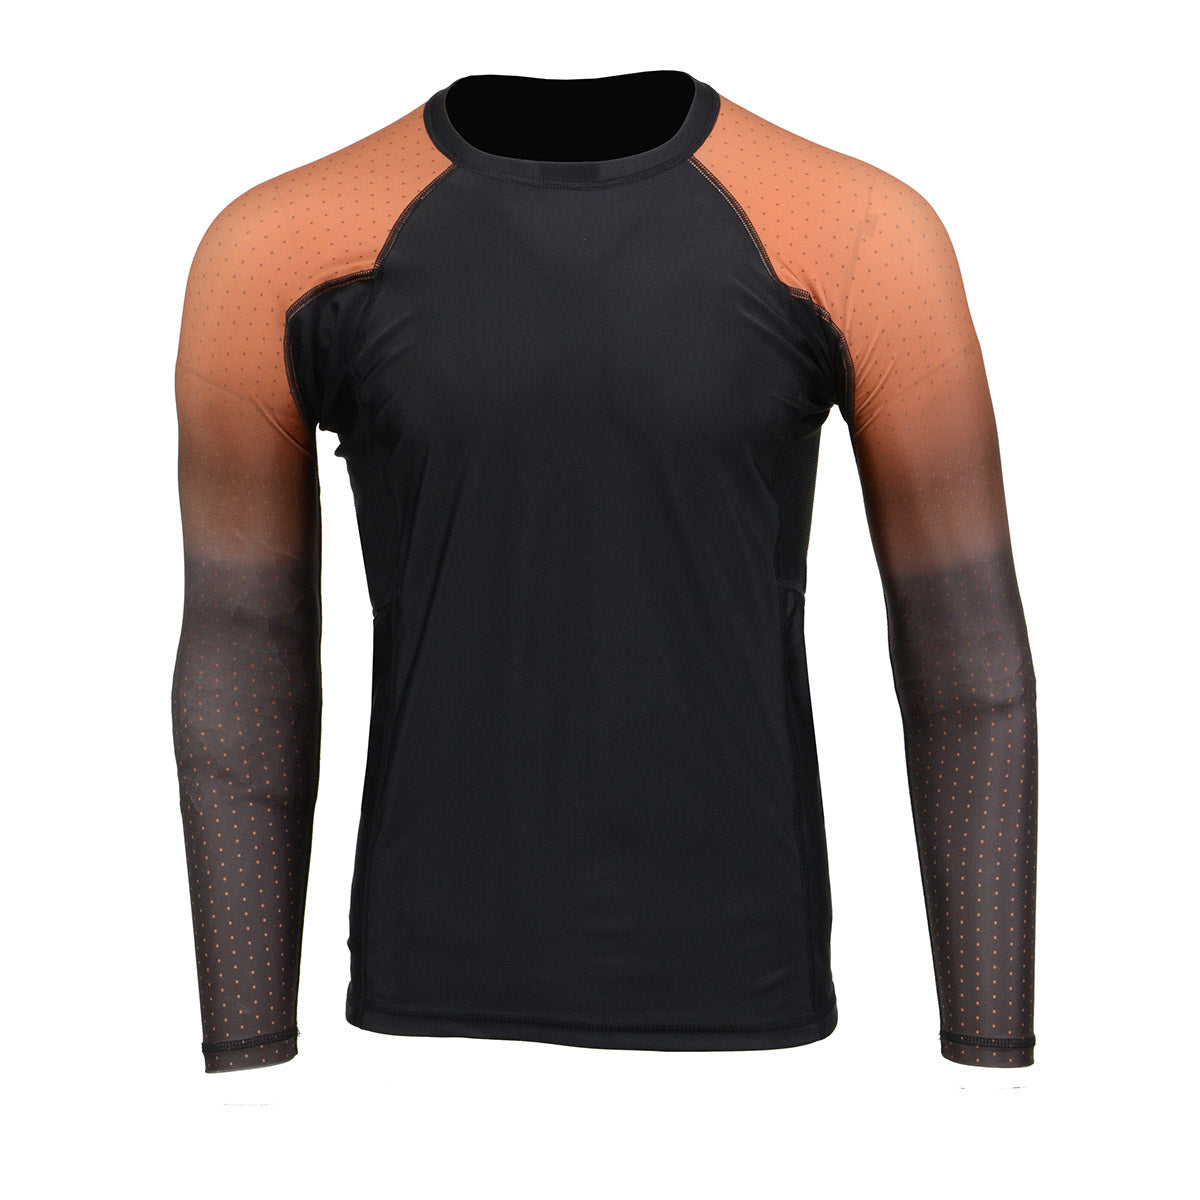 X-Fitness XFM7000 Men's Black and Brown Long Sleeve Compression Rash Guard Athletic Shirt- MMA, BJJ, Wrestling, Cross Training